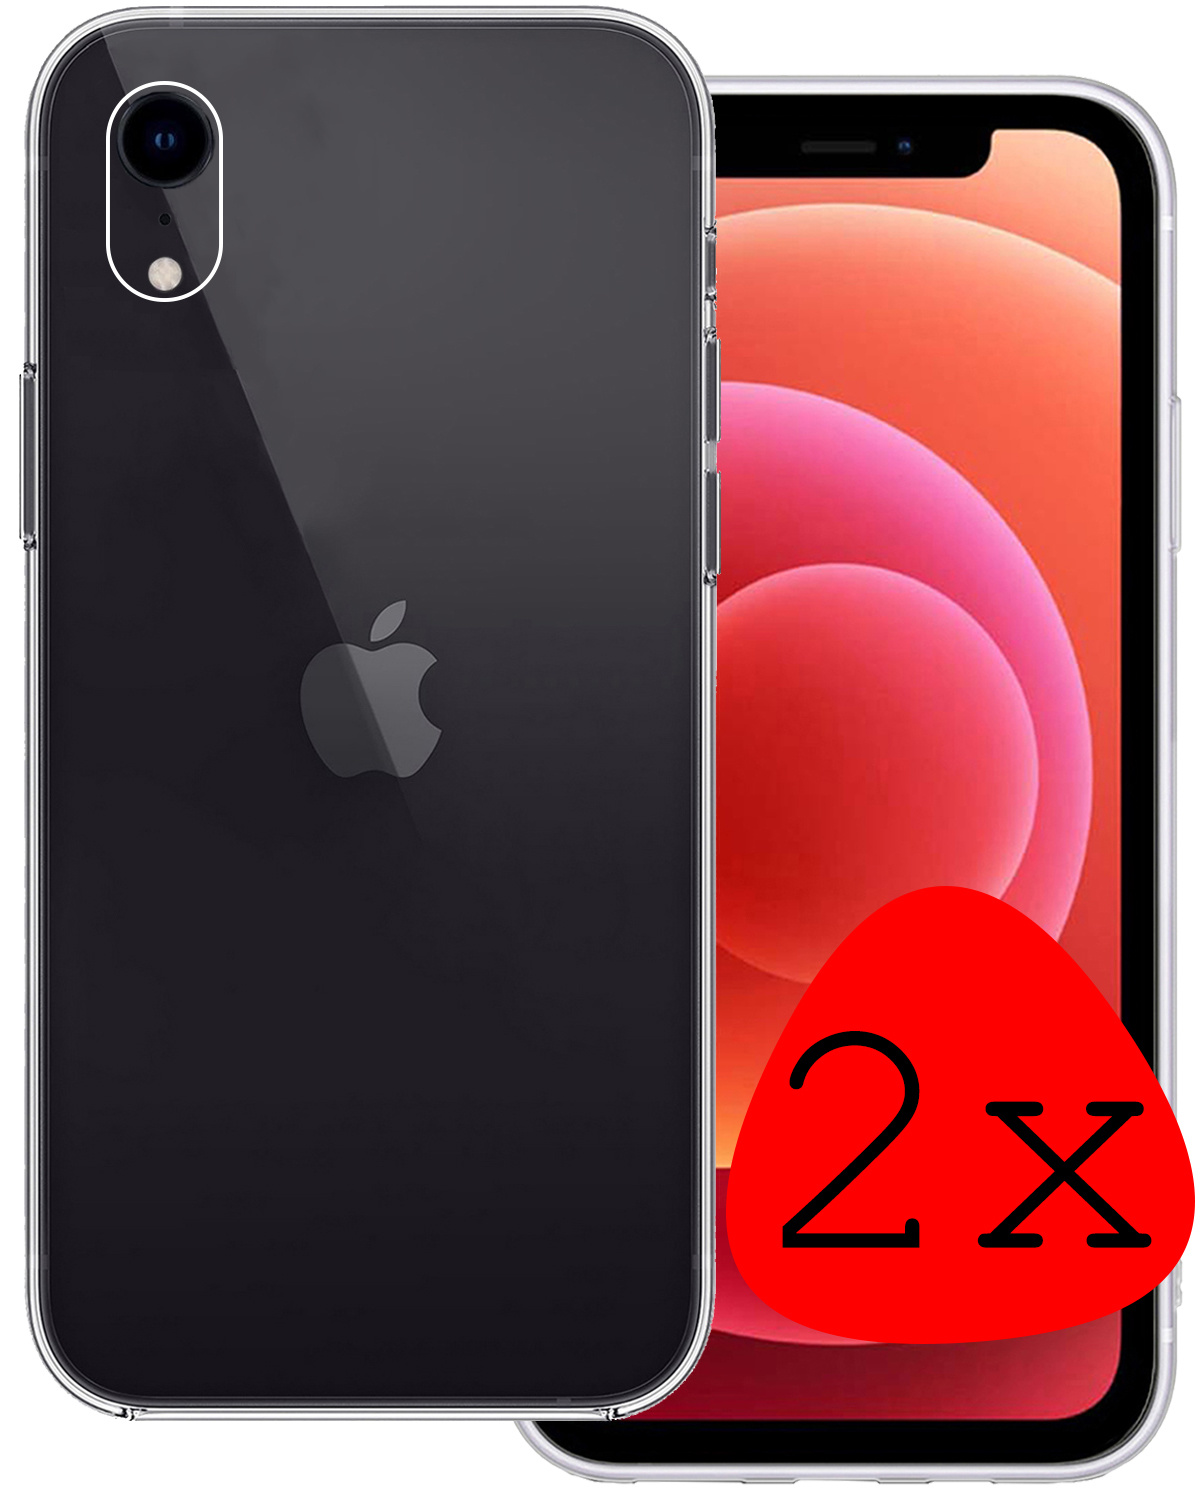 BASEY. Hoes voor iPhone XR Hoesje Siliconen Back Cover Case - Hoes voor iPhone XR Hoes Silicone Case Hoesje - Transparant - 2 Stuks